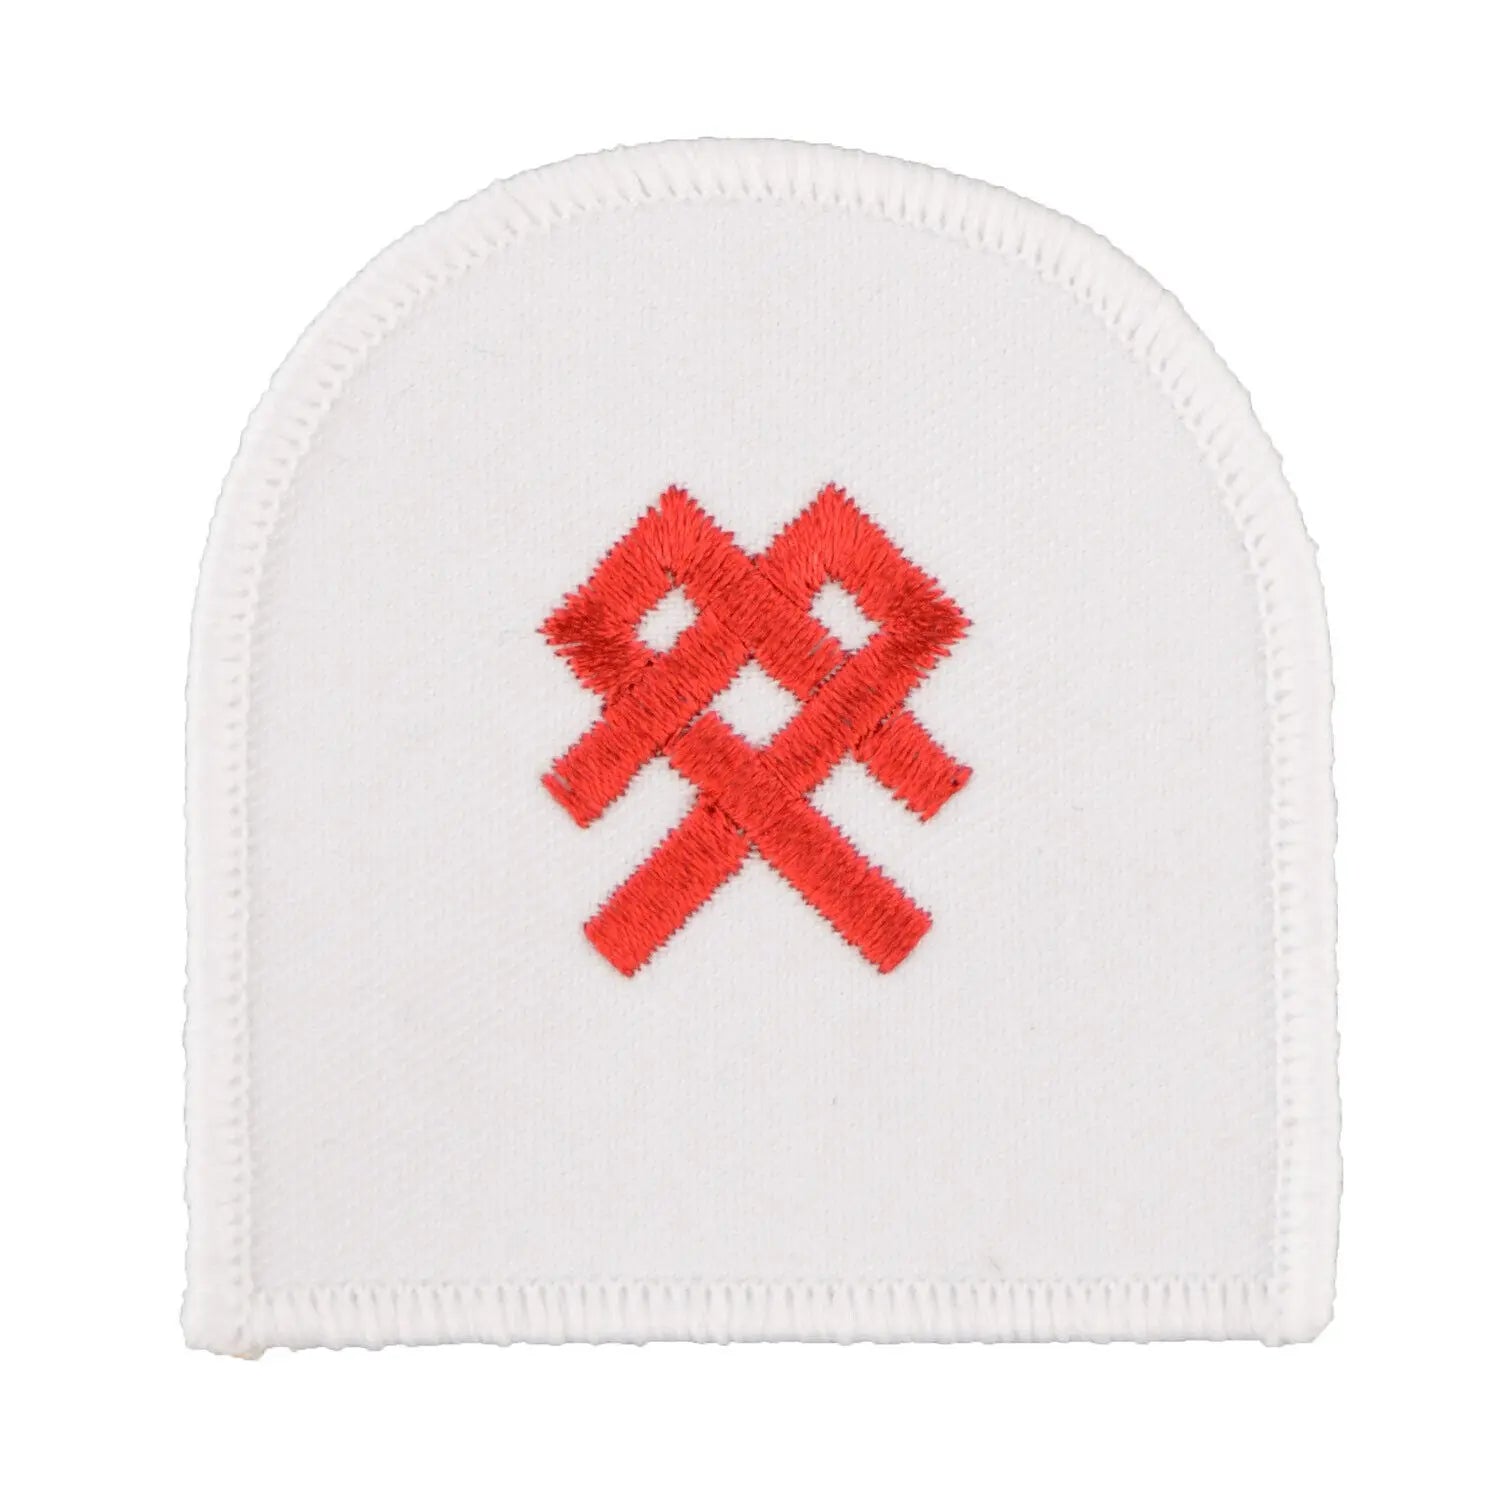 QARNNS Badge Qualification Monogram Royal Navy Badge Machine Embroidered Wyedean